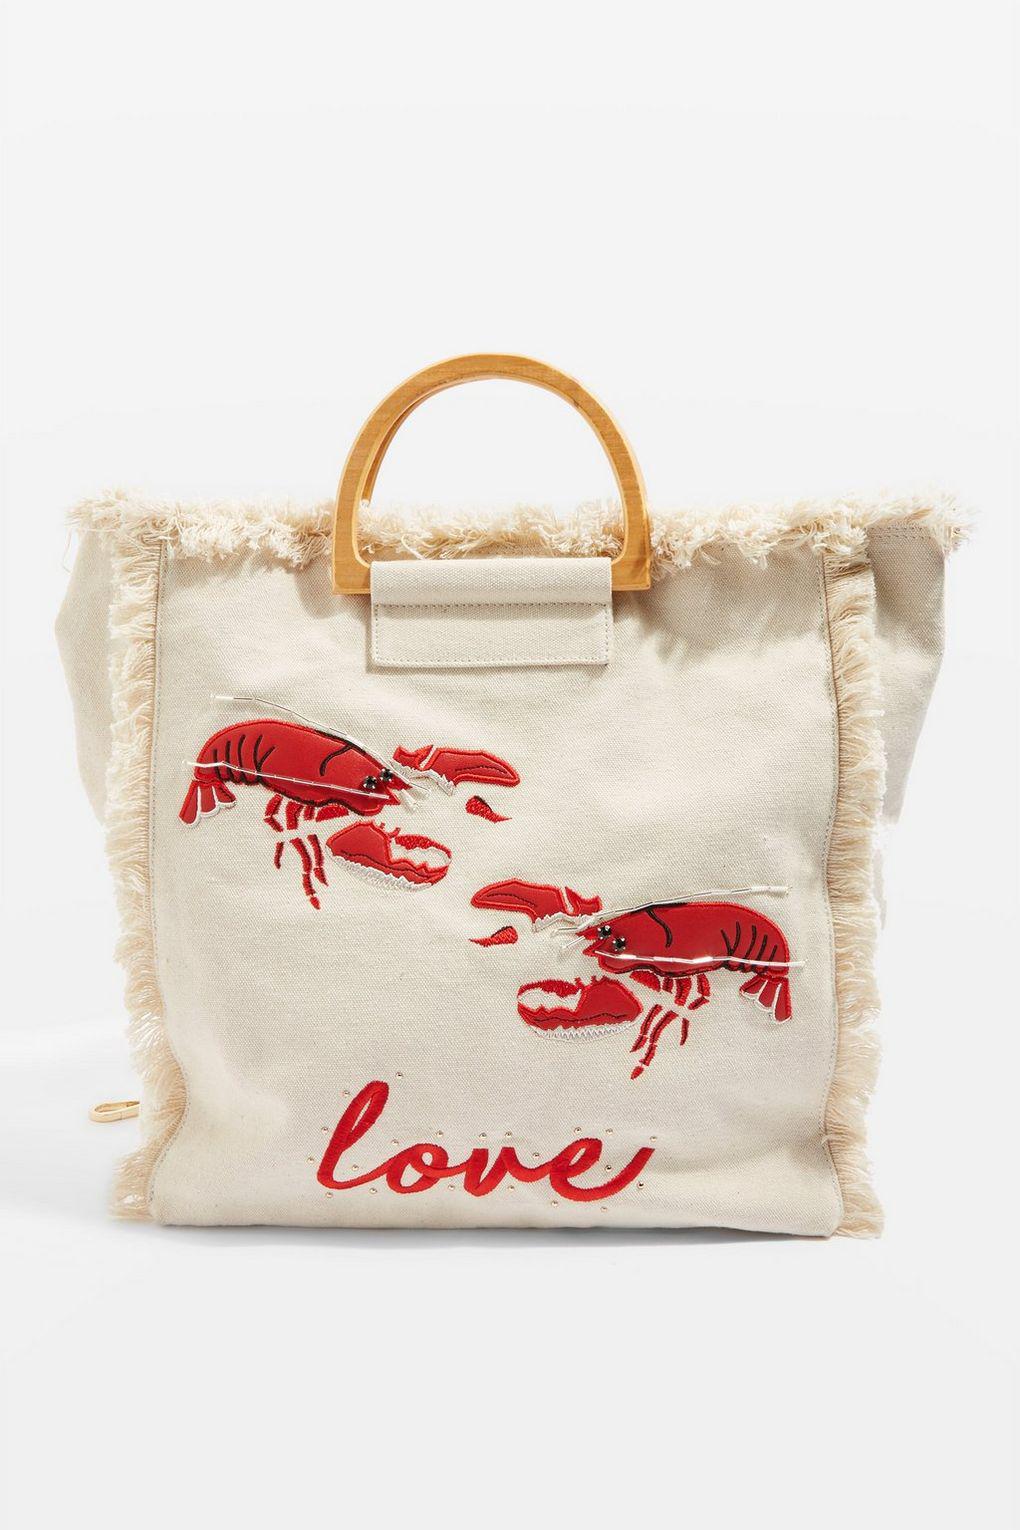 TOPSHOP Bobby Lobster Canvas Shopper Bag in Natural - Lyst